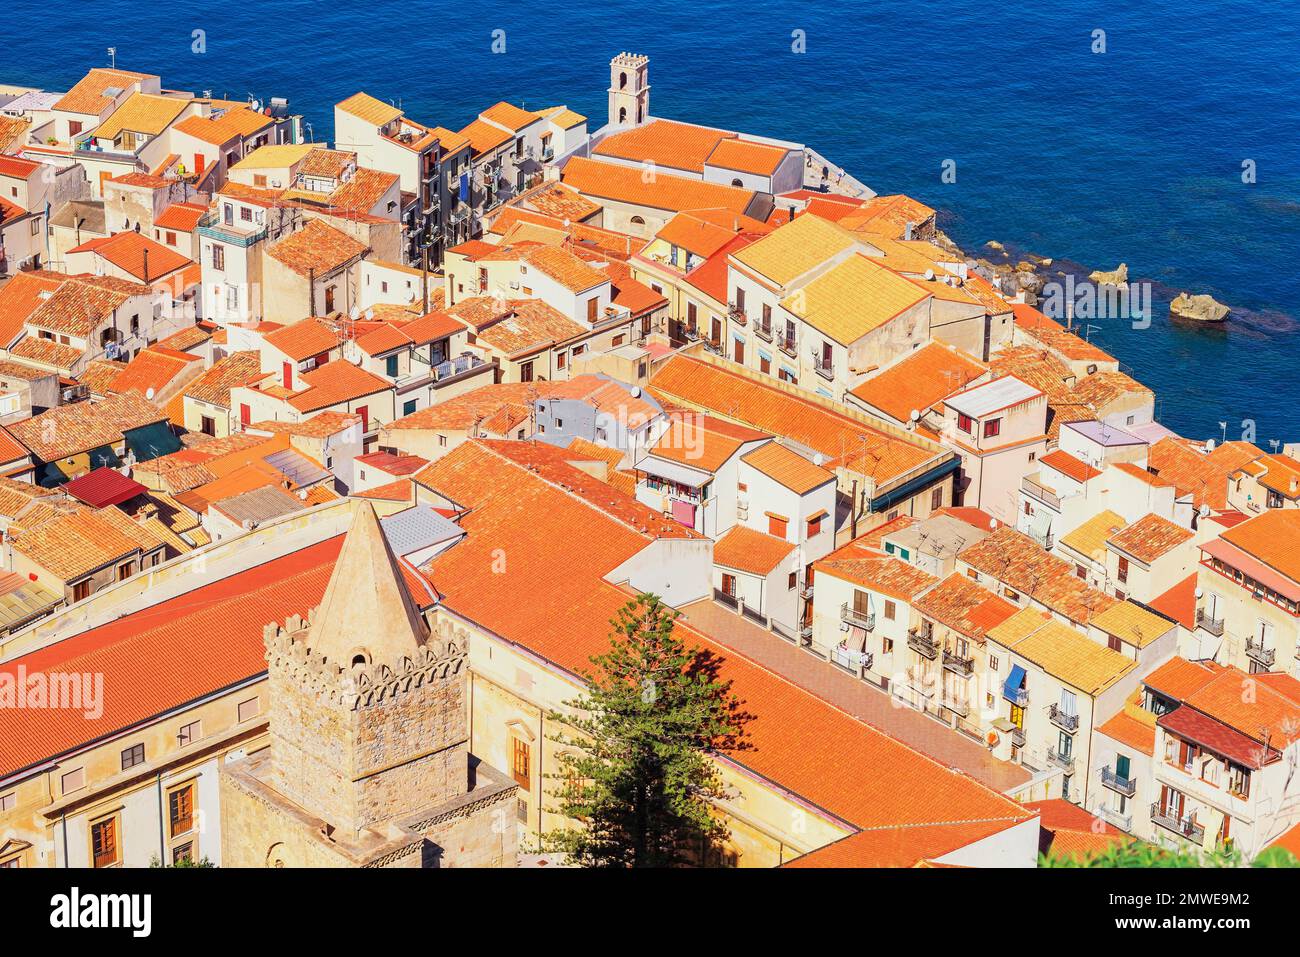 Cefalu town, top view, Cefalu, Sicily, Italy Stock Photo - Alamy